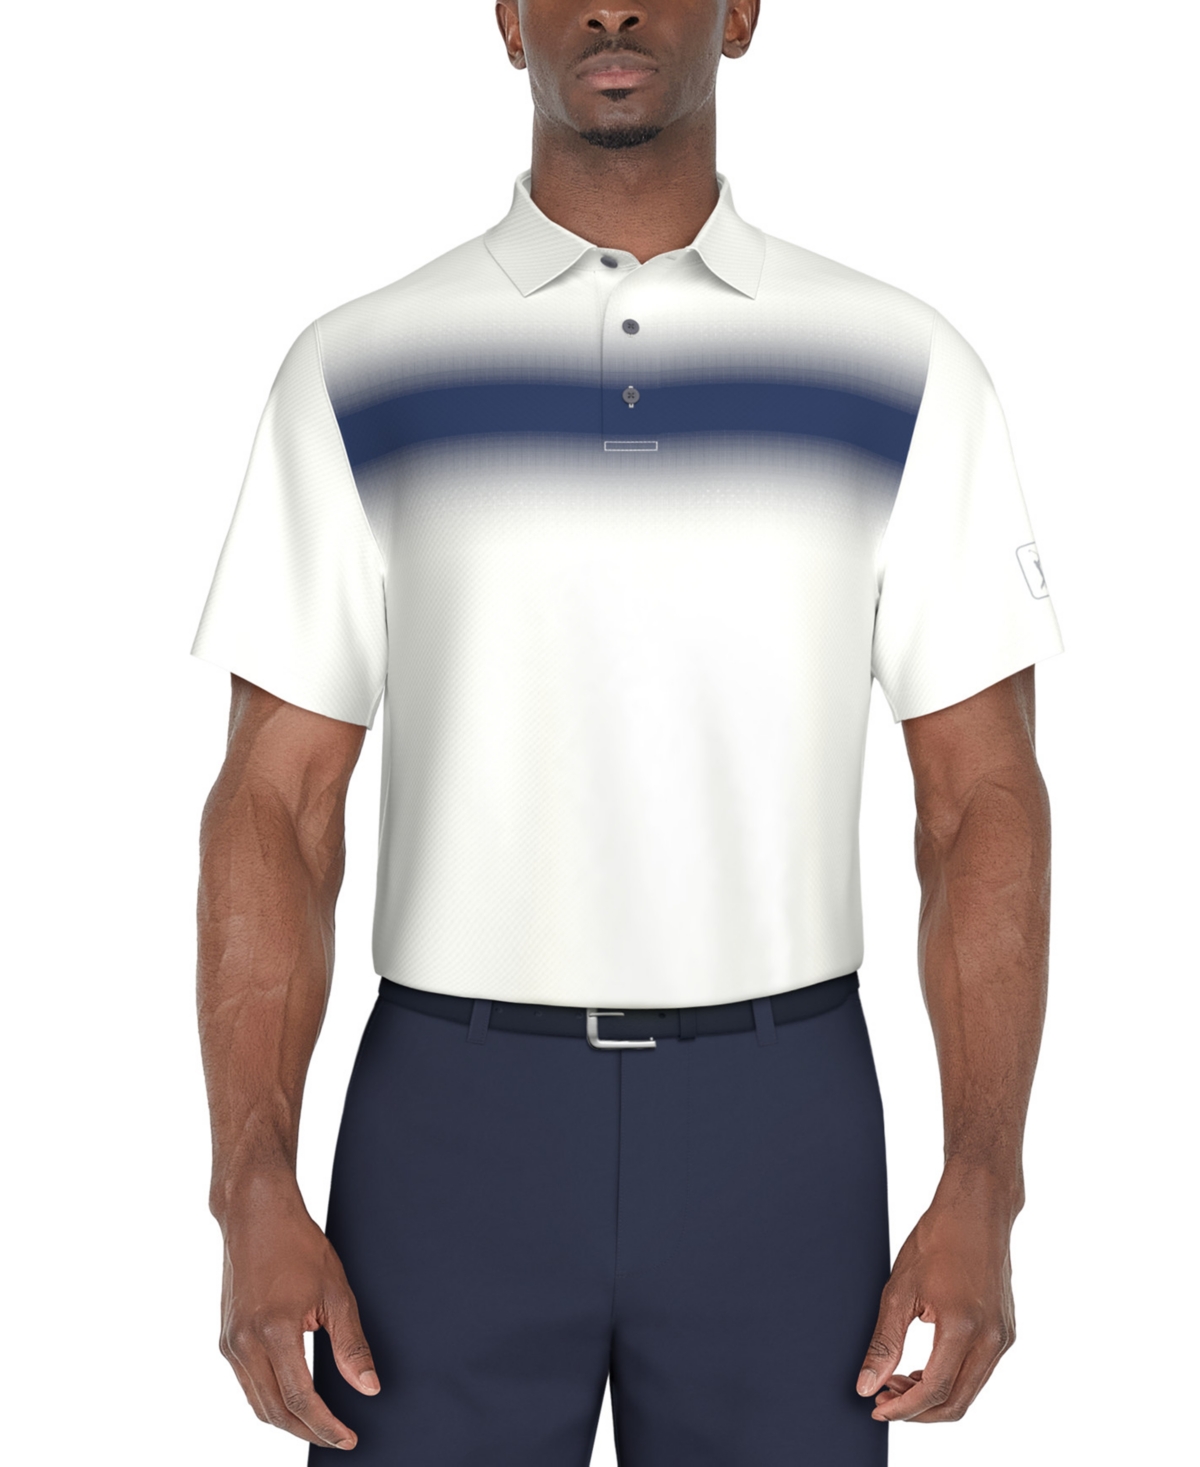 Men's Short Sleeve Textured Performance Polo Shirt - Blue Curac